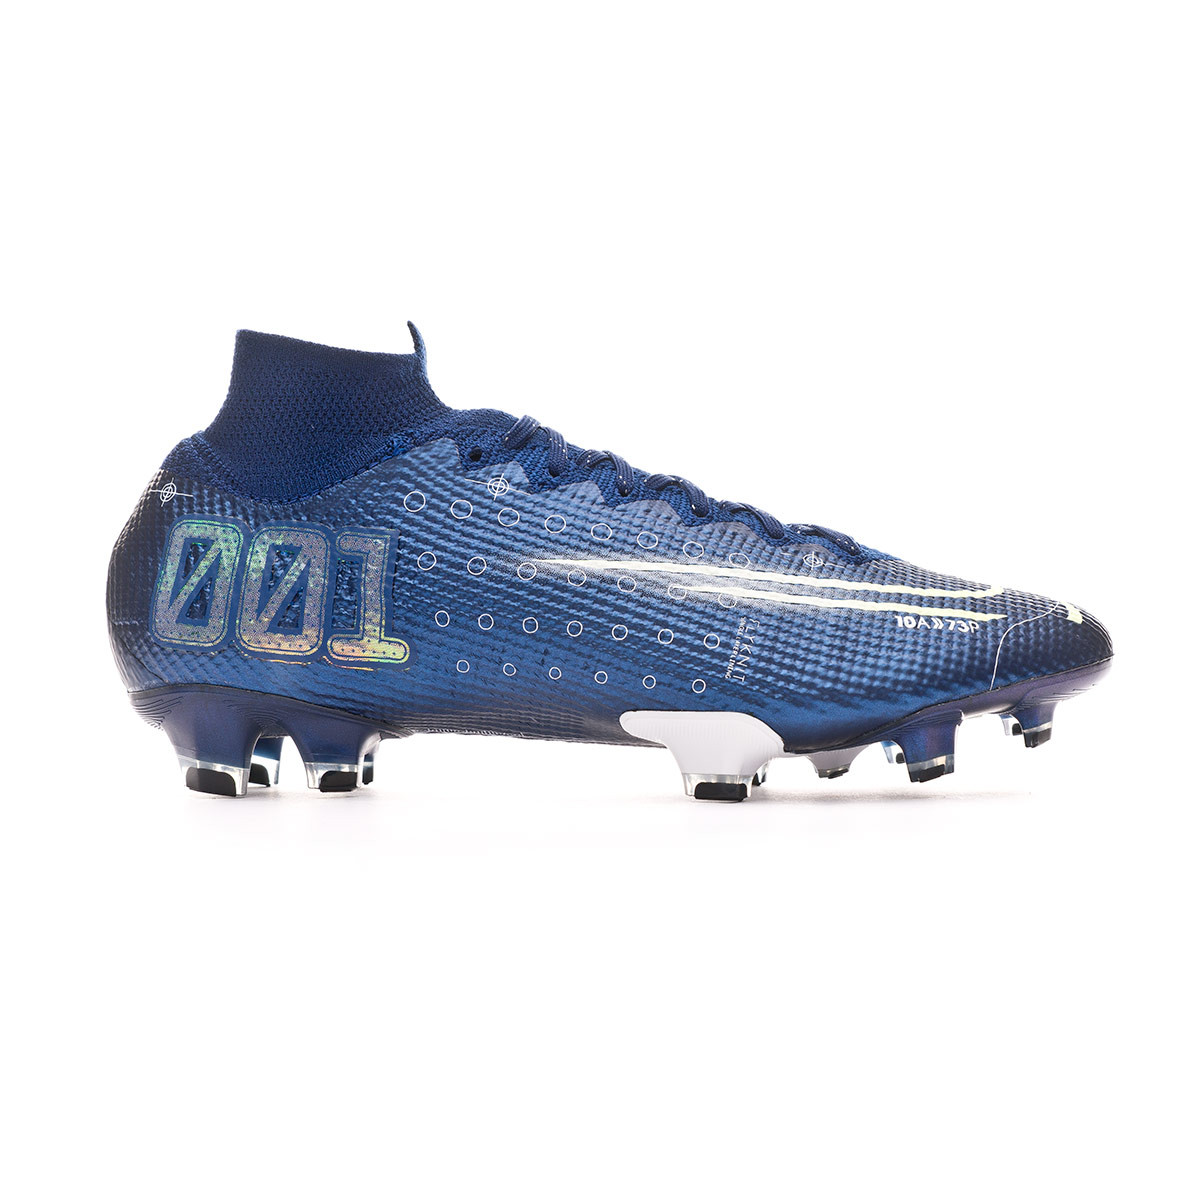 Nike Mercurial Superfly 7 Elite FG Facebook Football Boots